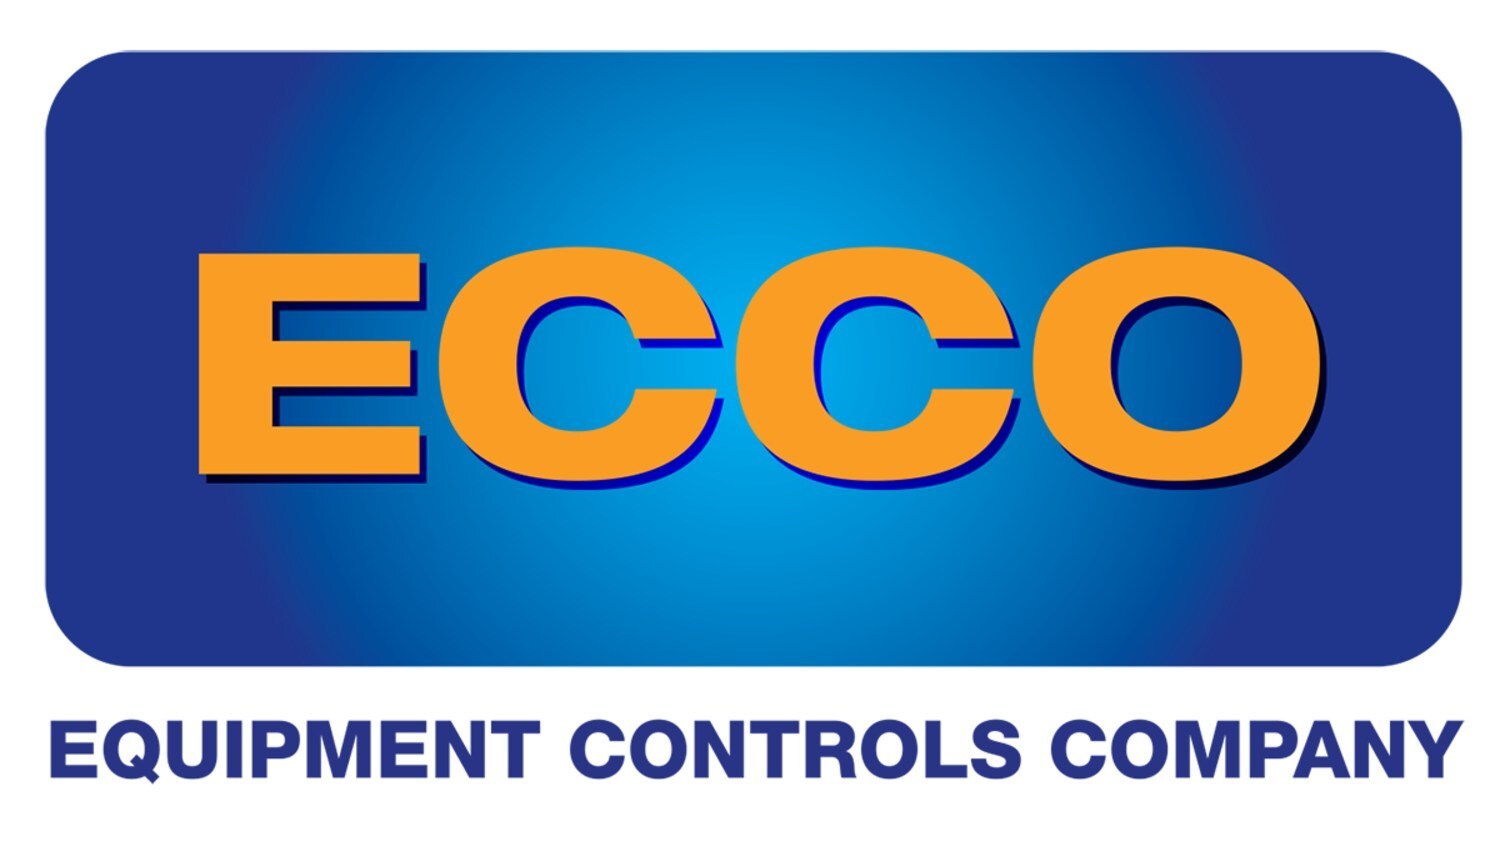 Equipment Controls Company